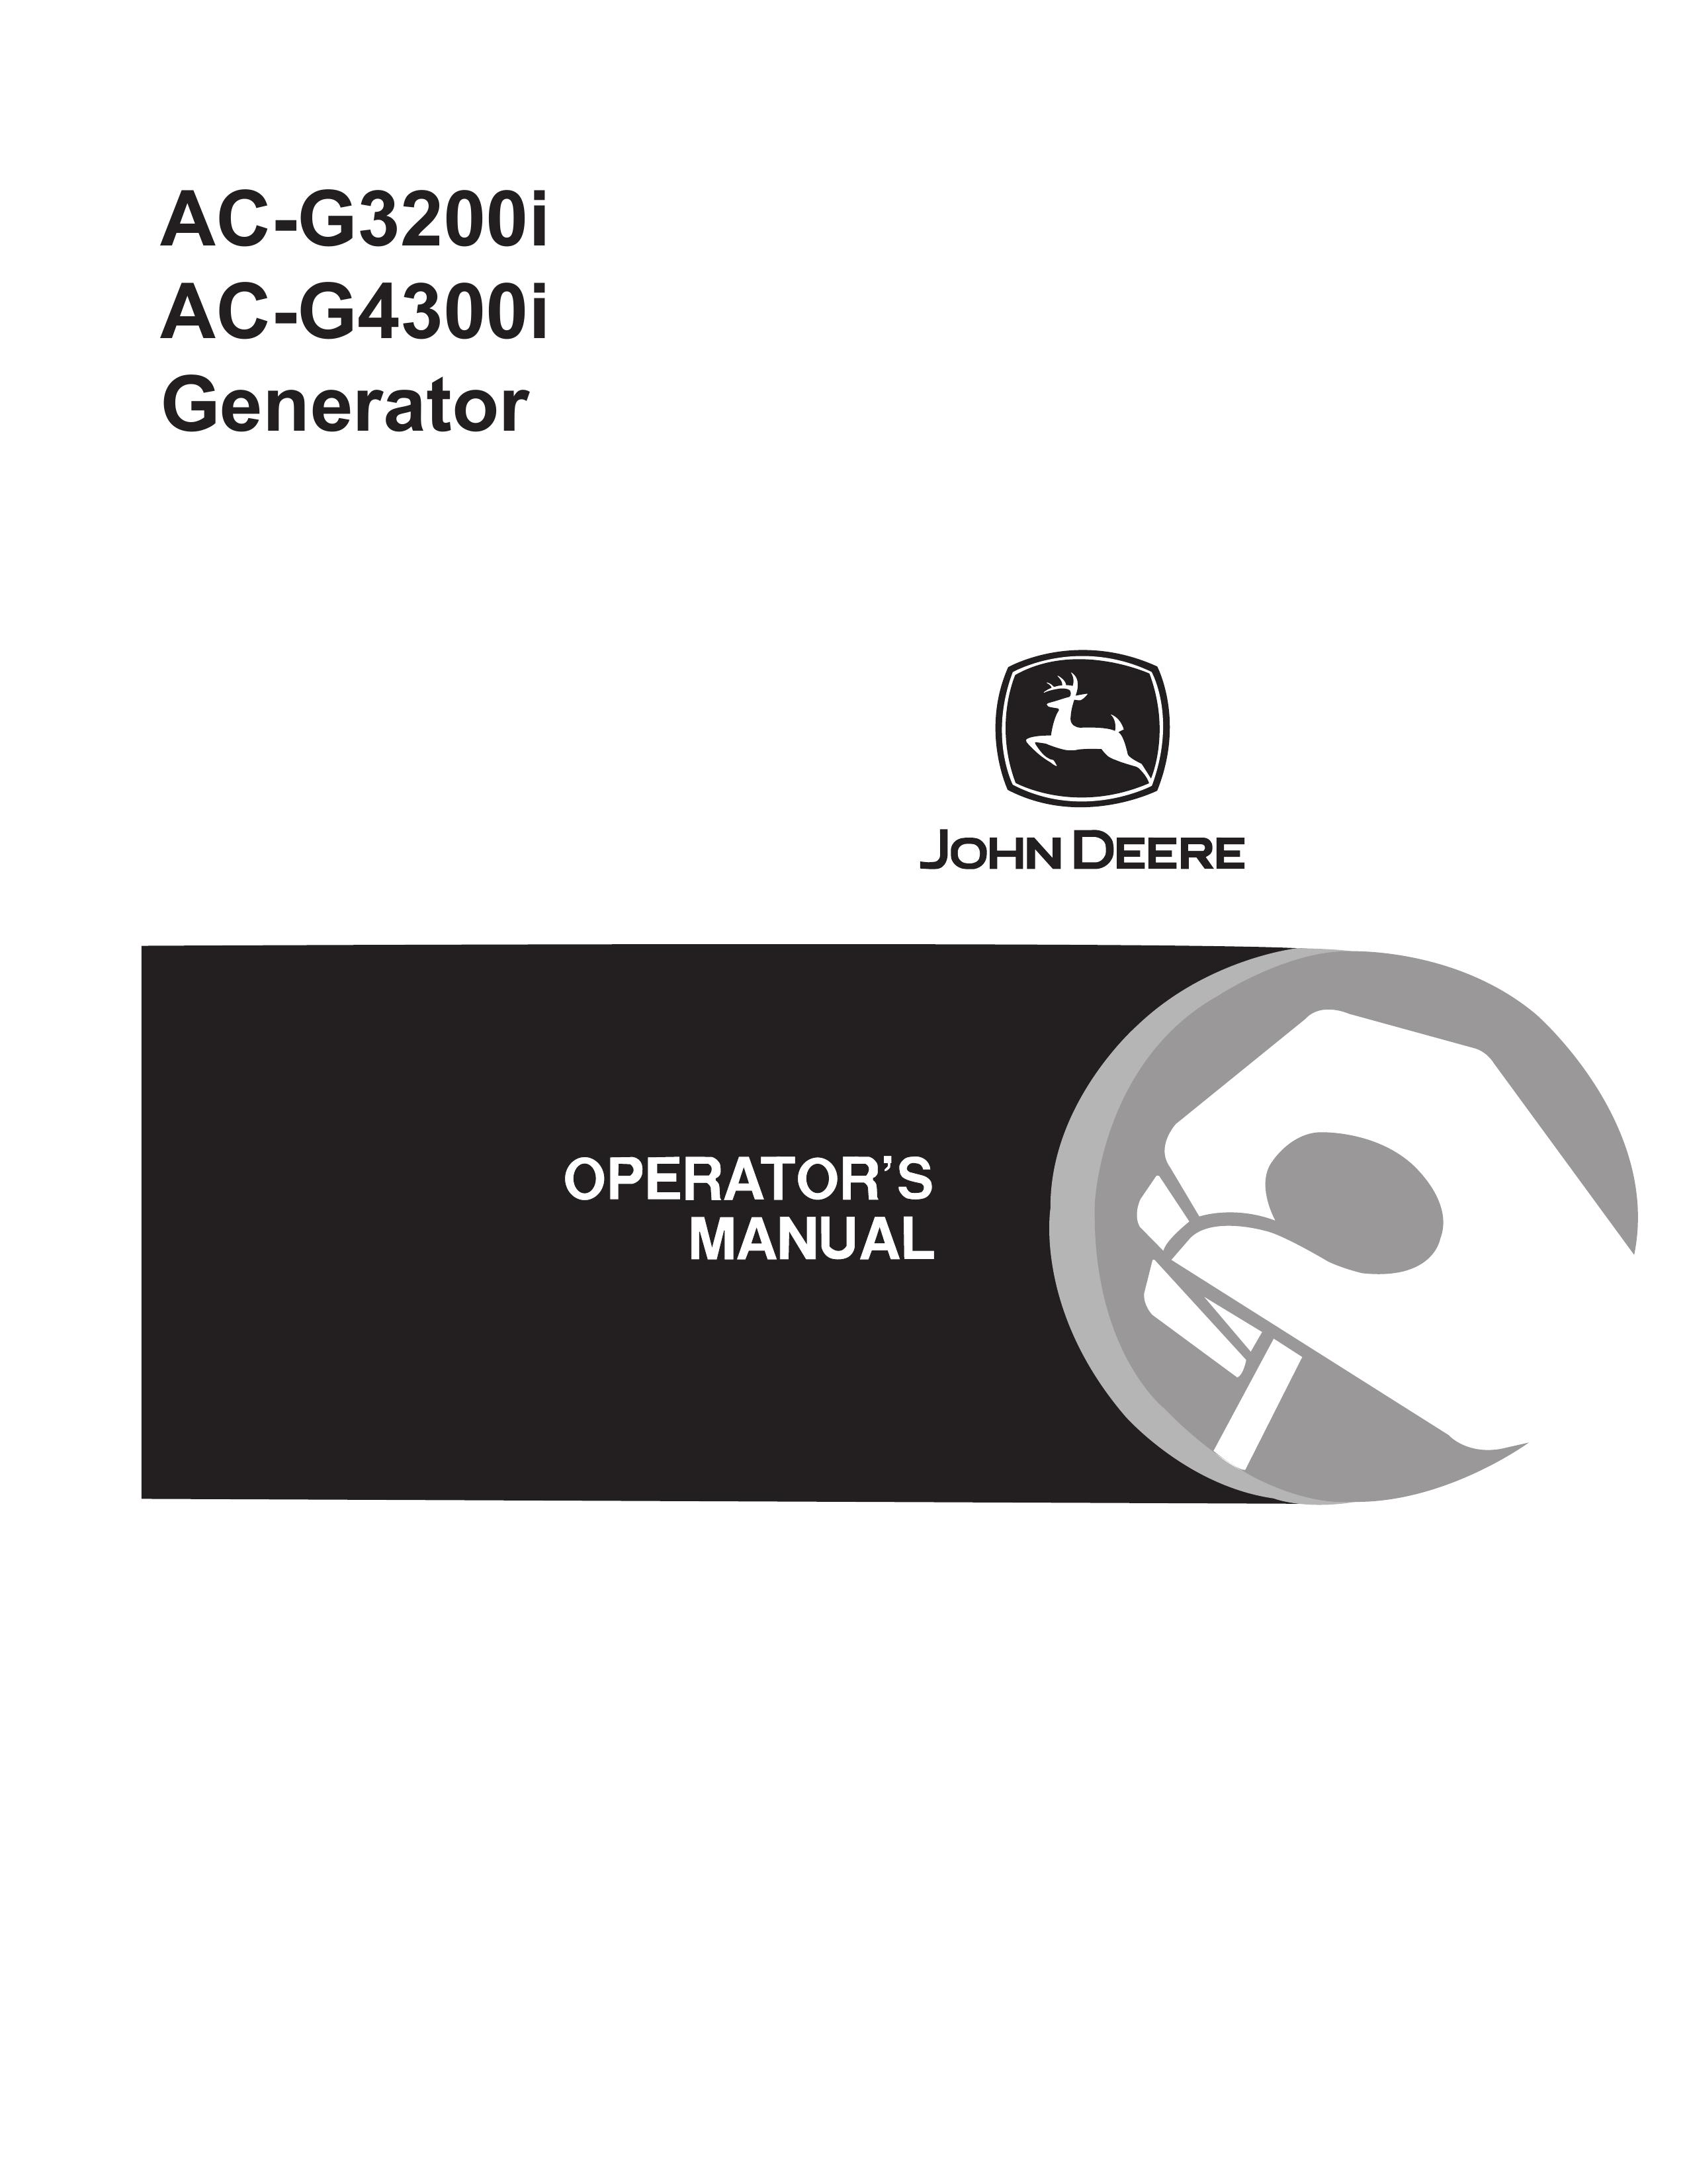 John Deere AC-G4300i Portable Generator User Manual